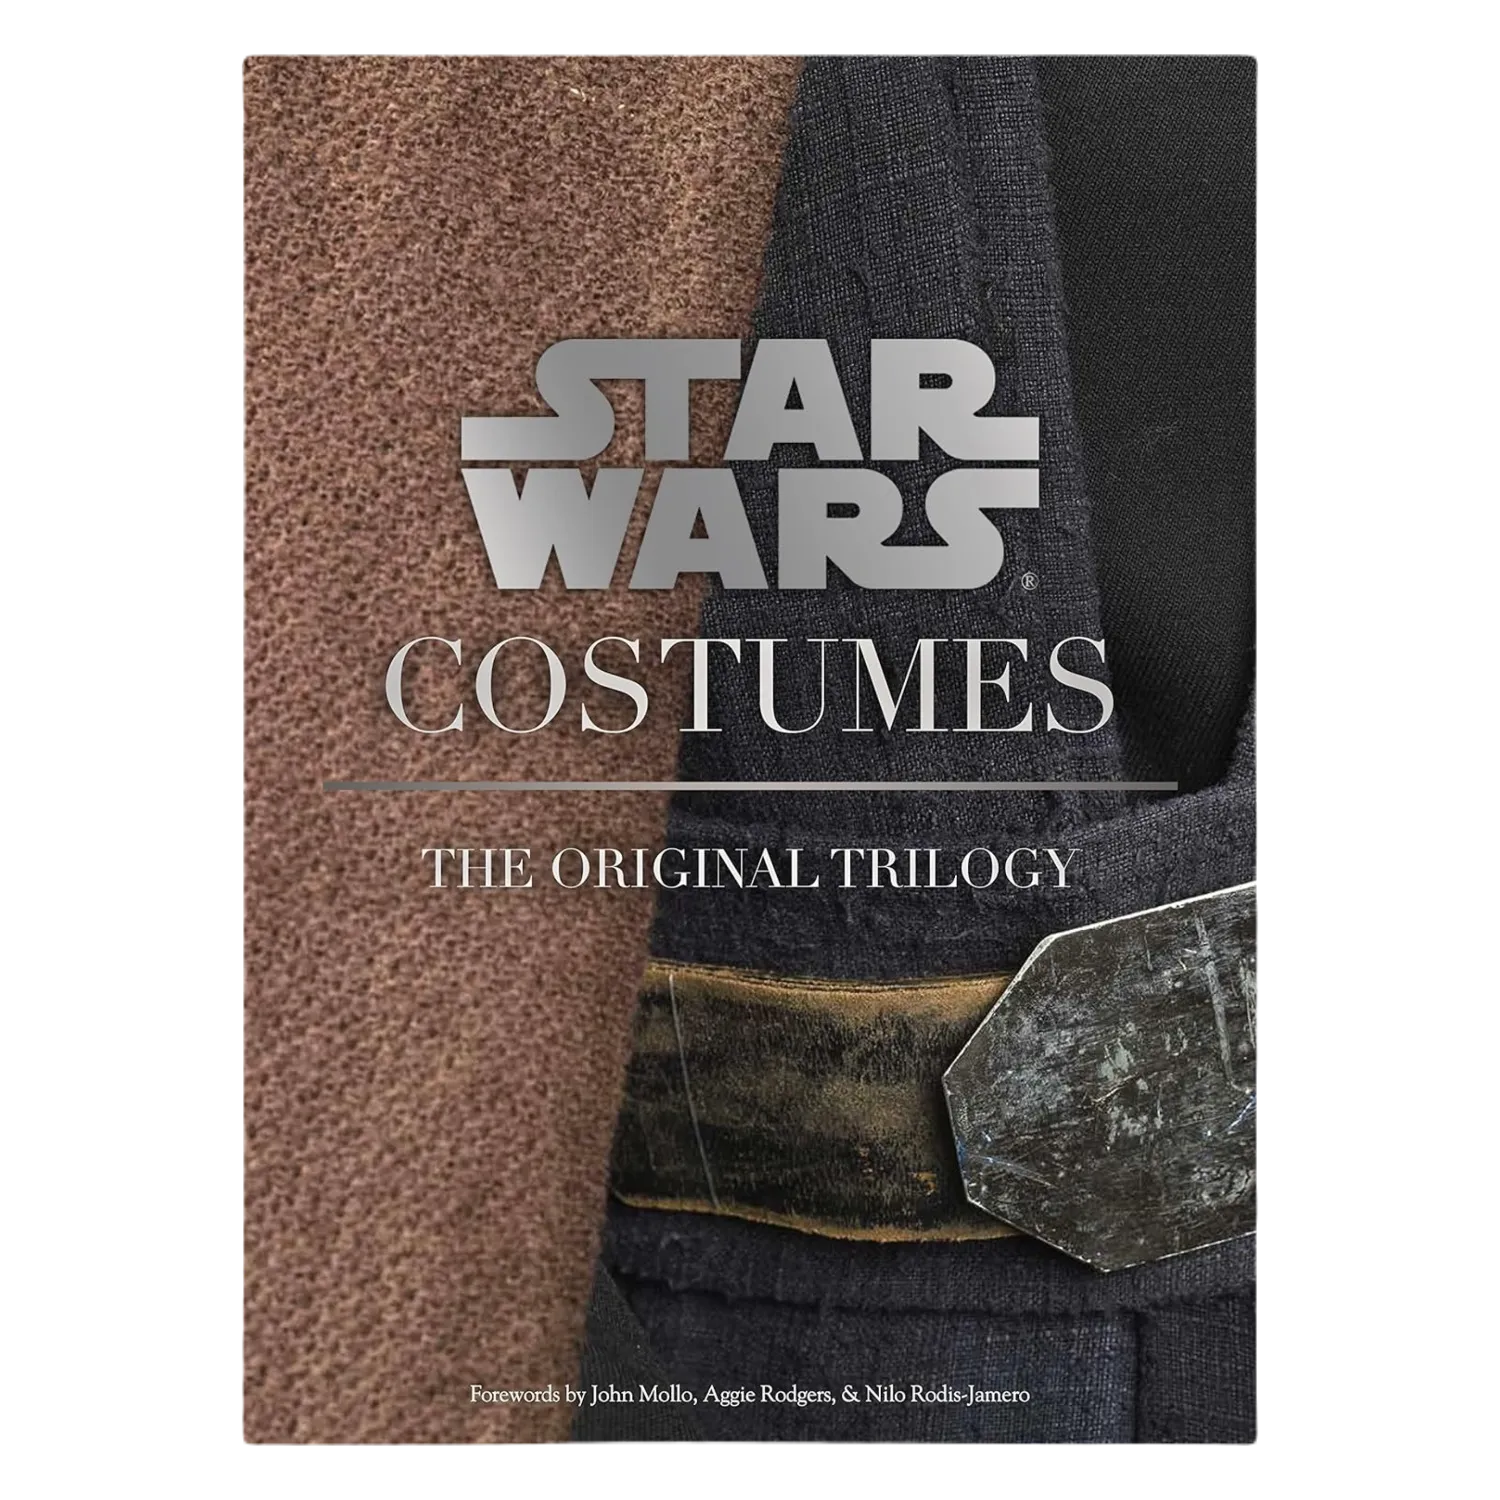 Star Wars Costumes: The Original Trilogy by Brandon Alinger (2014)